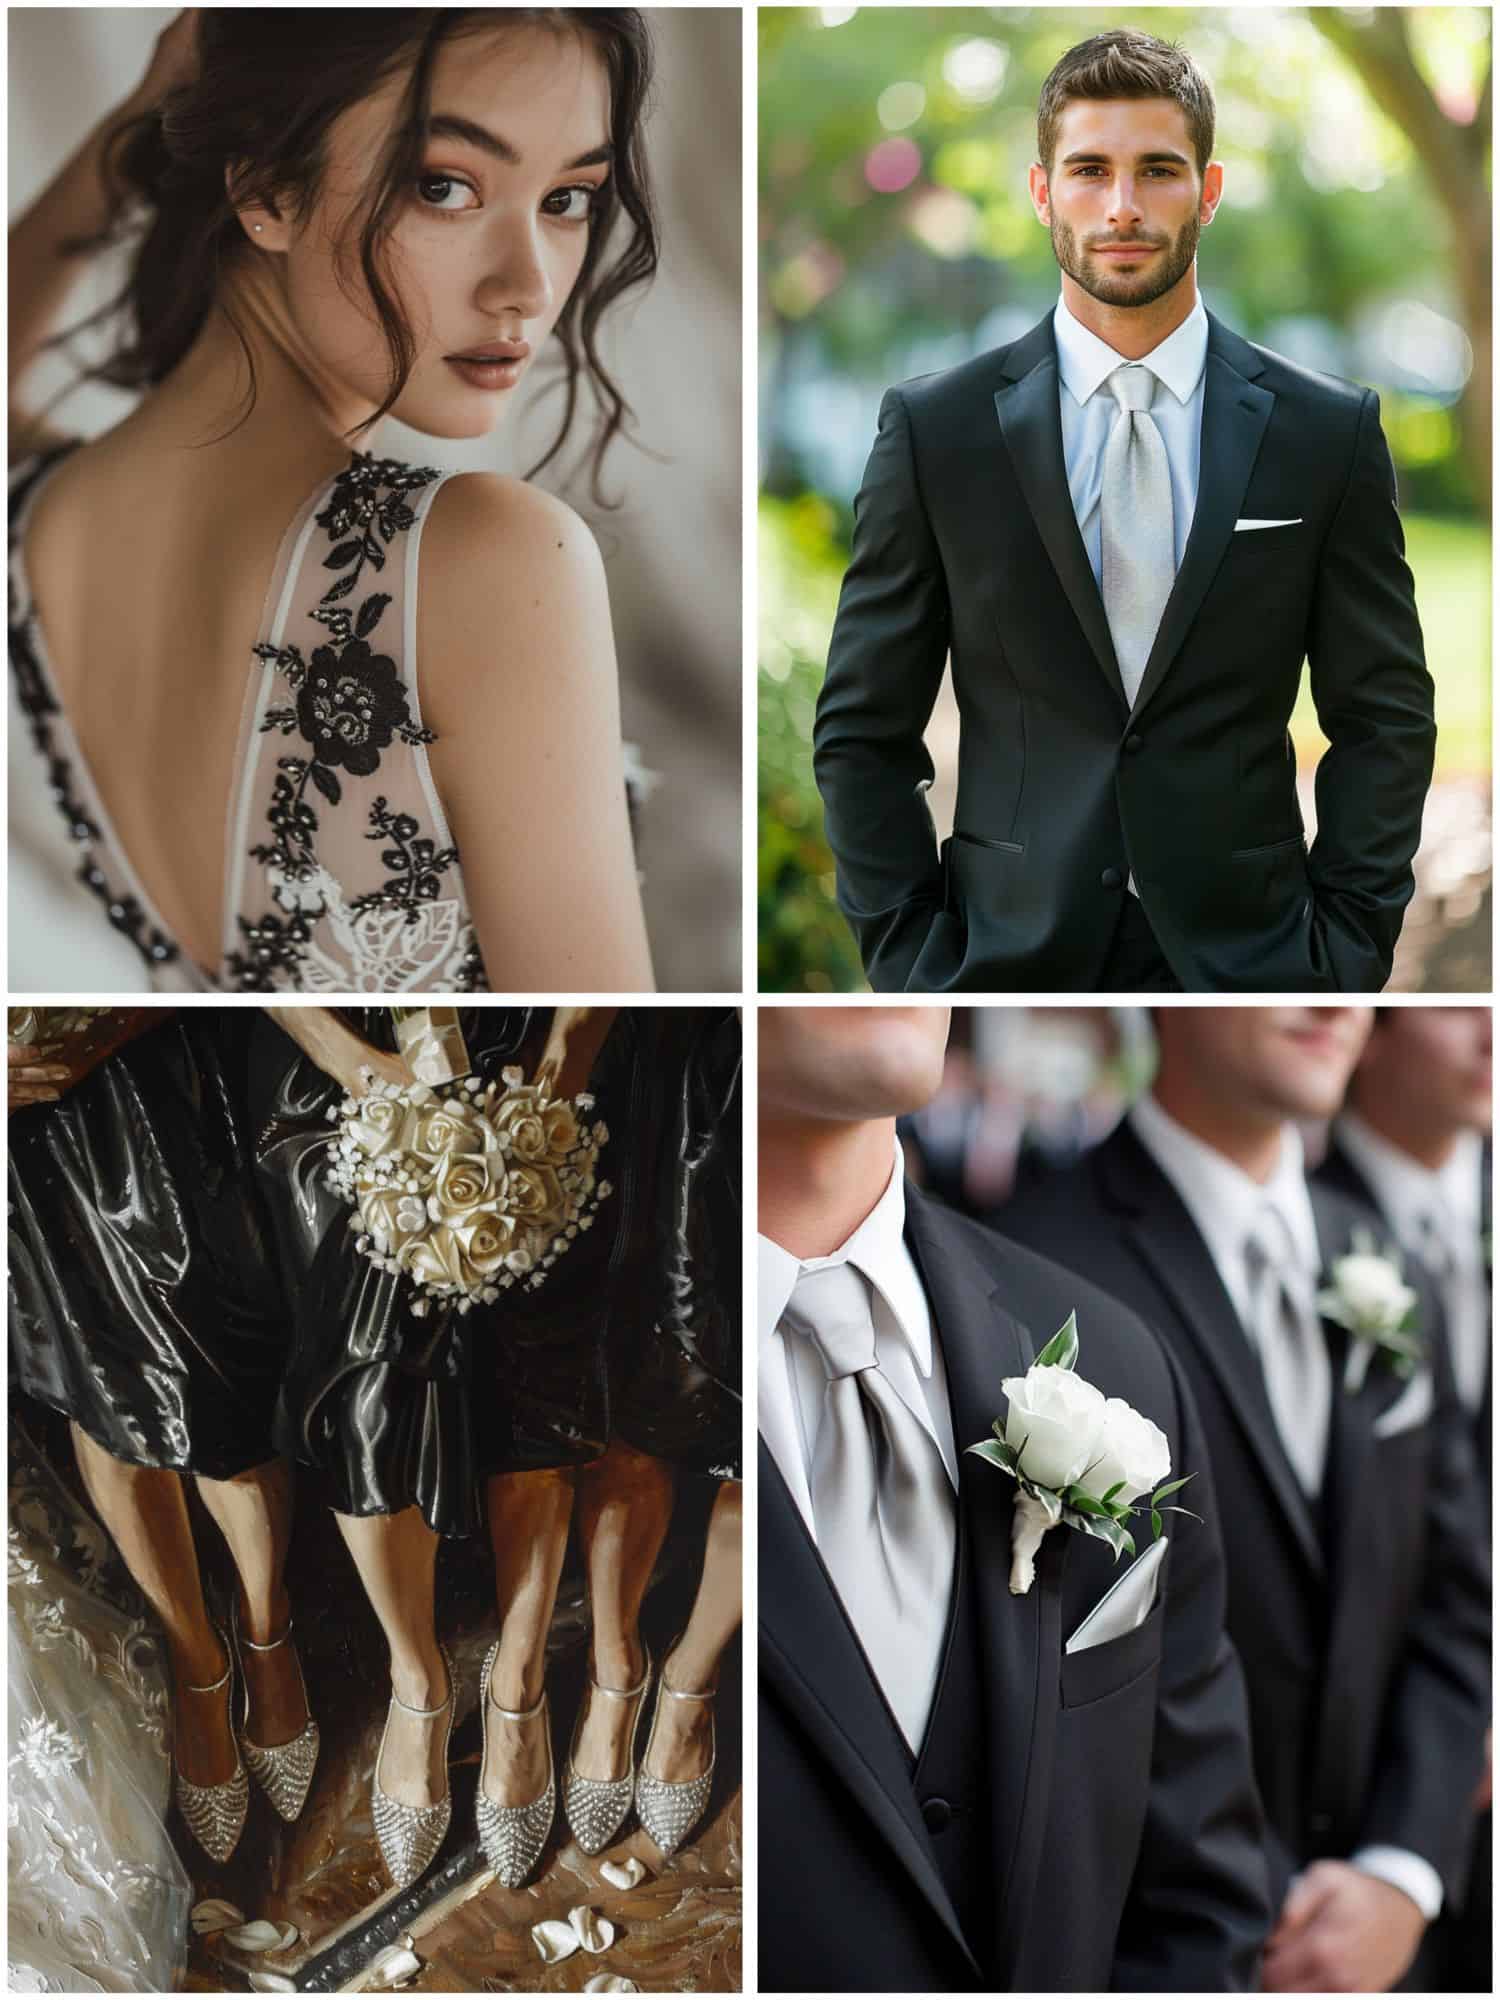 black and silver wedding theme ideas for attire